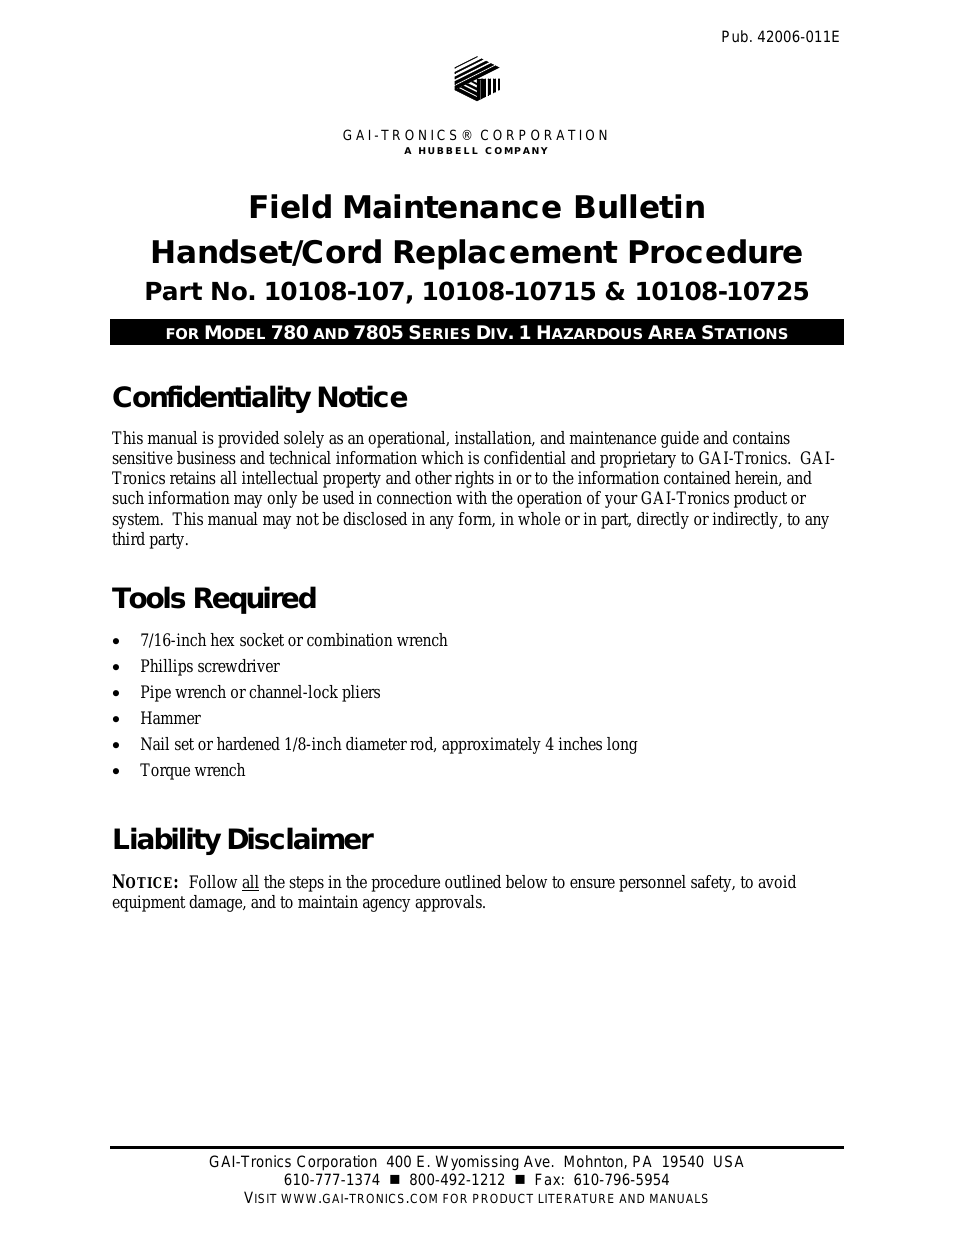 10108-007 Field Maintenance Bulletin: Handset/Cord Replacement Procedure for Model 780 & 7805 Series Div. 1 Hazardous Area Stations